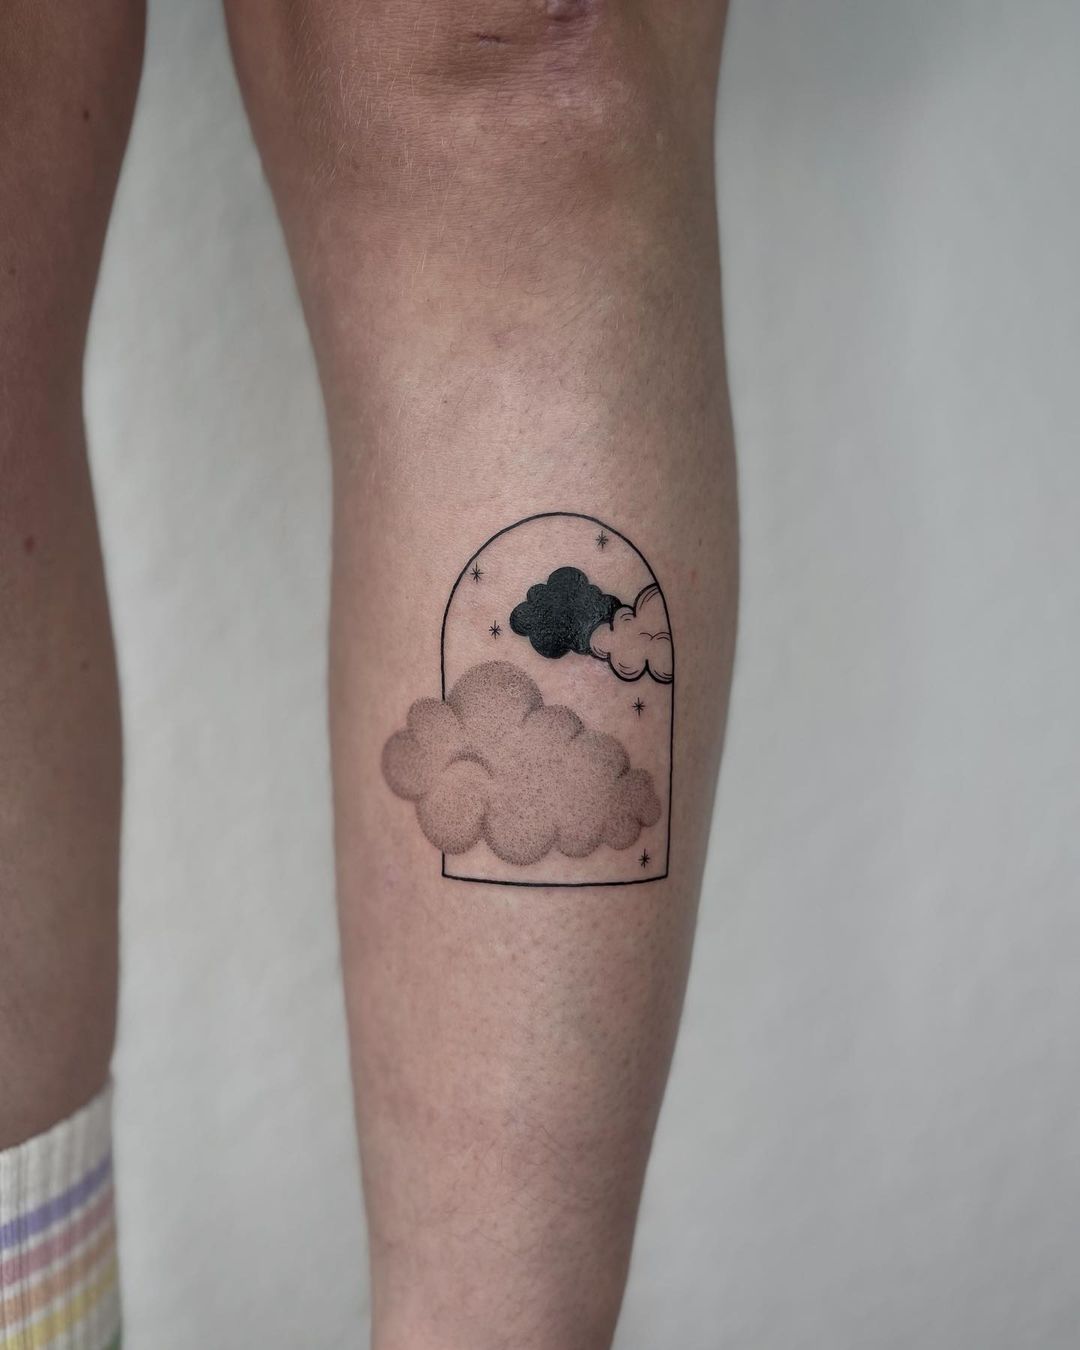 Cute cloud tattoos by bisschentinte